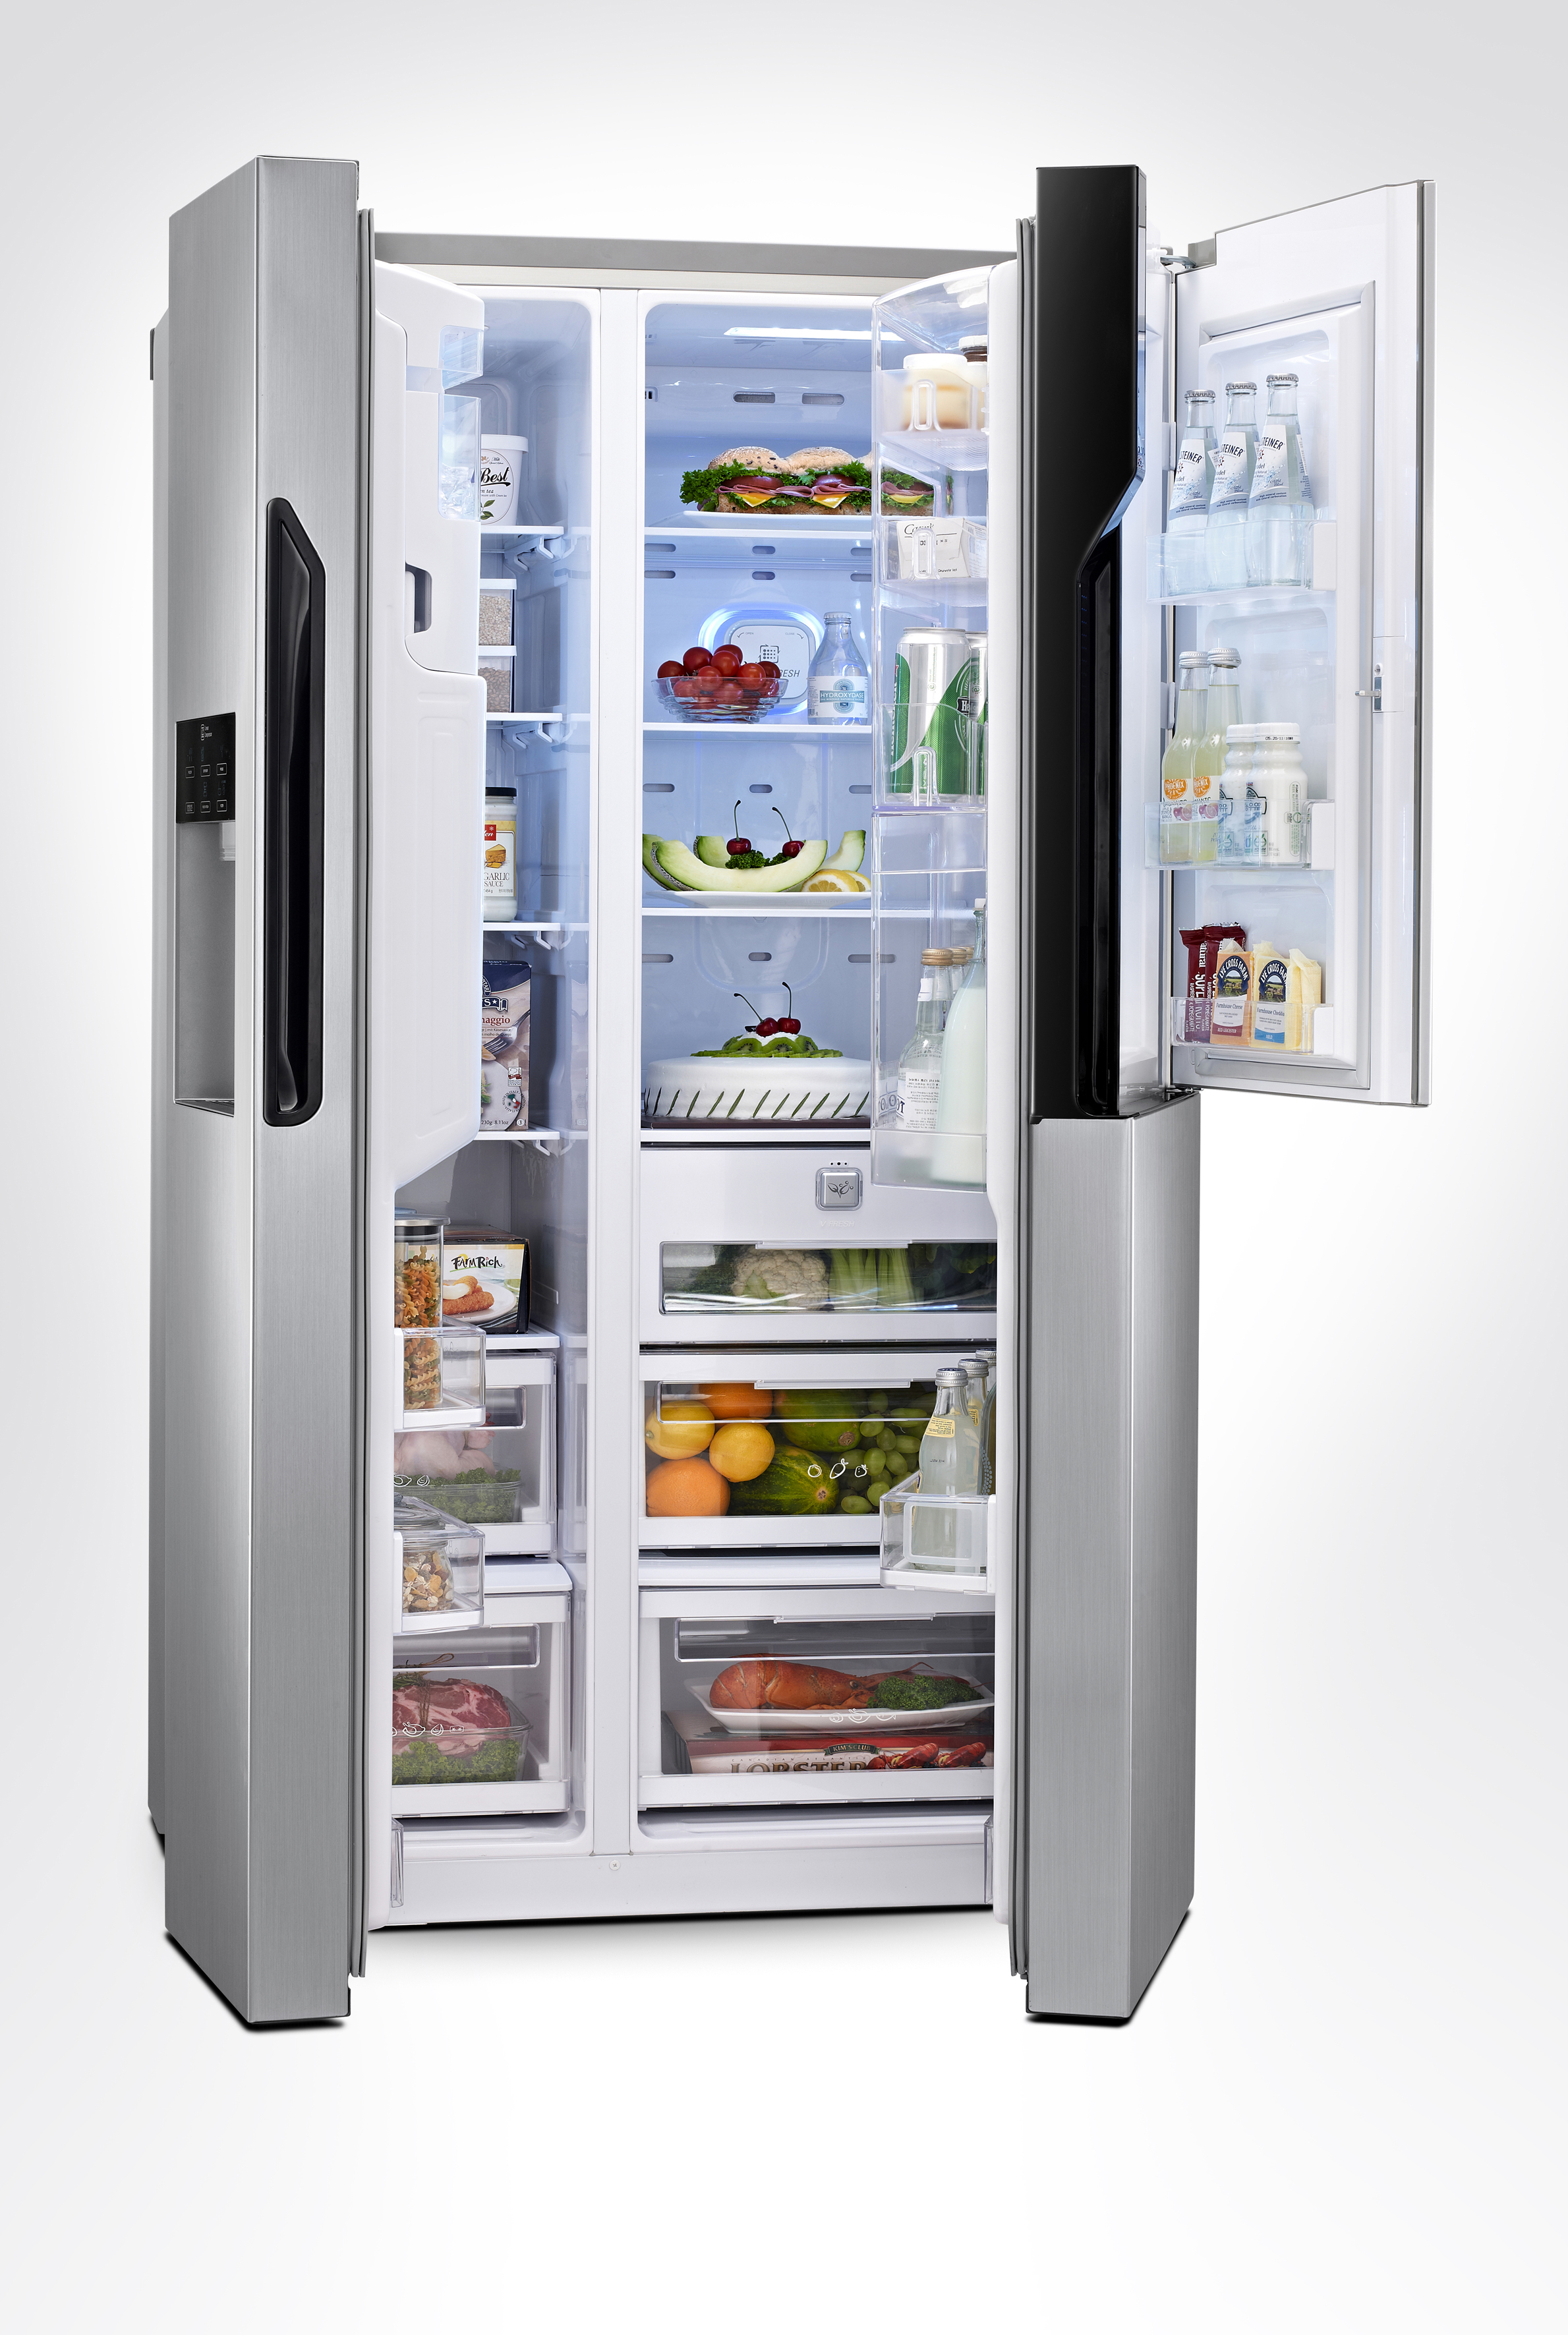 The LG French-Door refrigerator with its large doors opened to show off its Door-in-Door feature located on the top of the right door